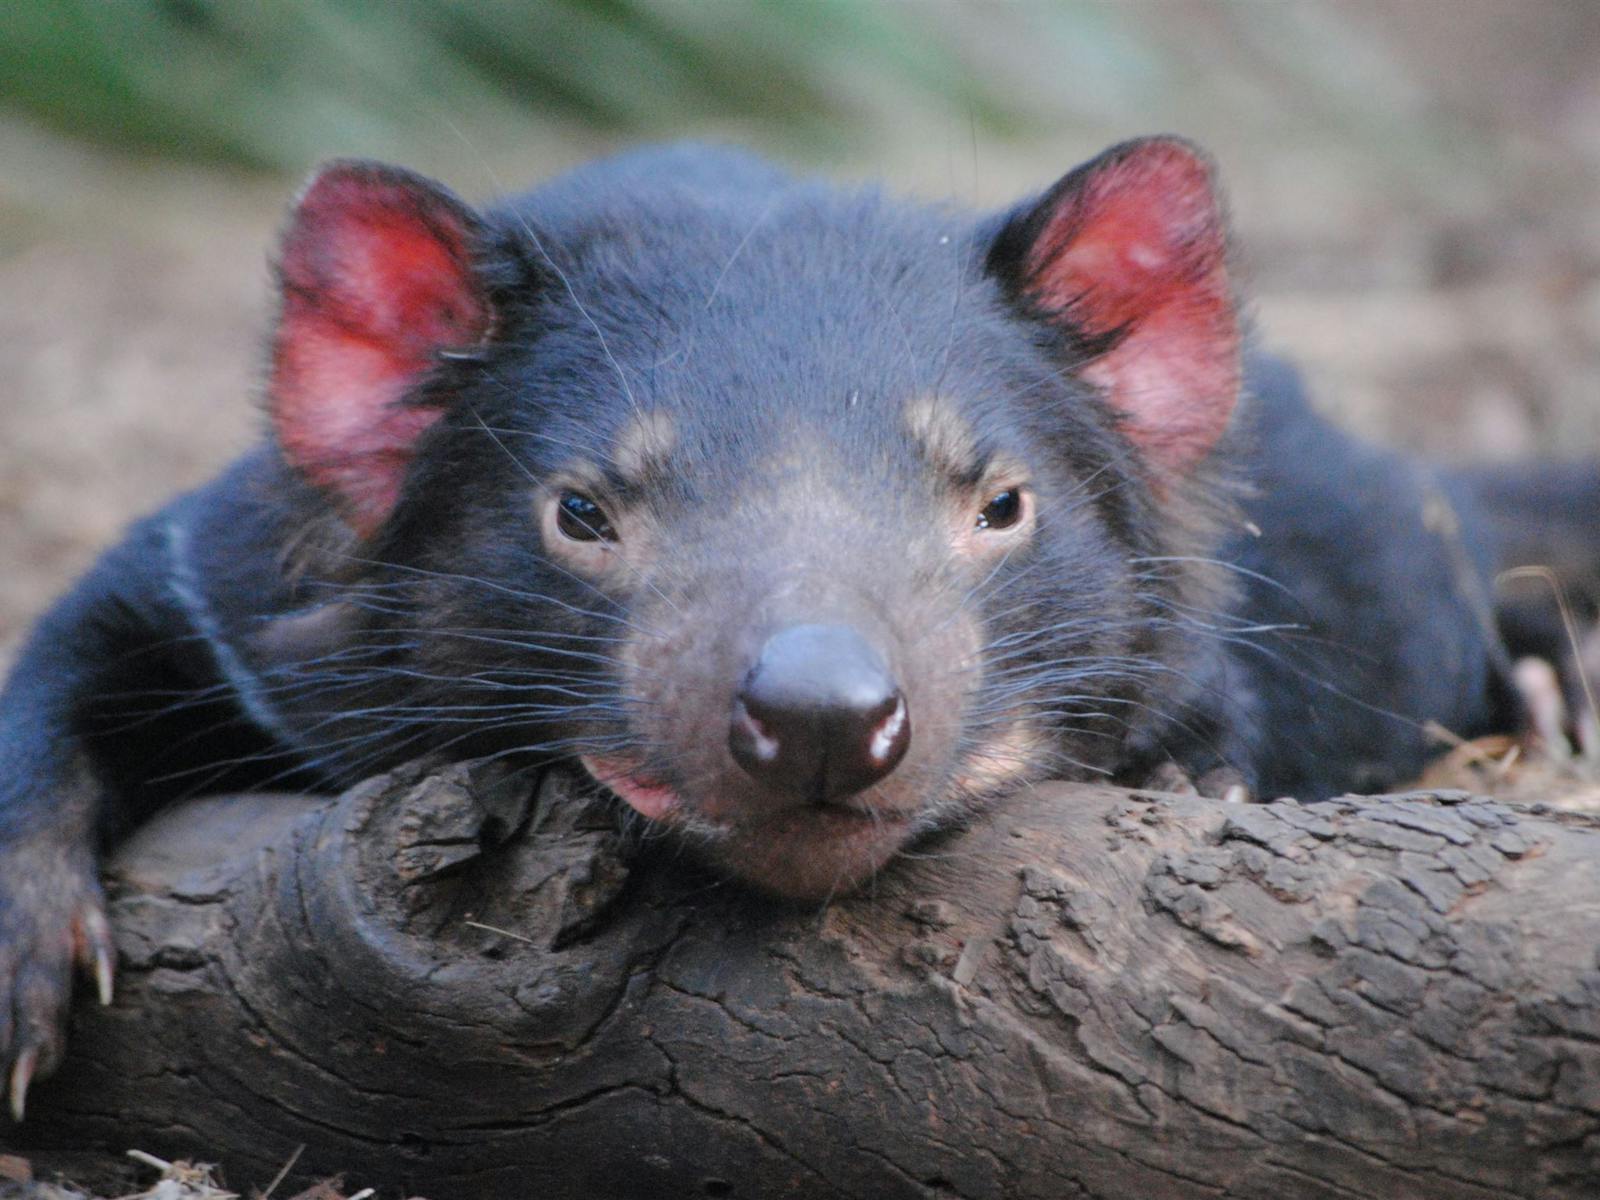 Tasmanian devil looking sleepy